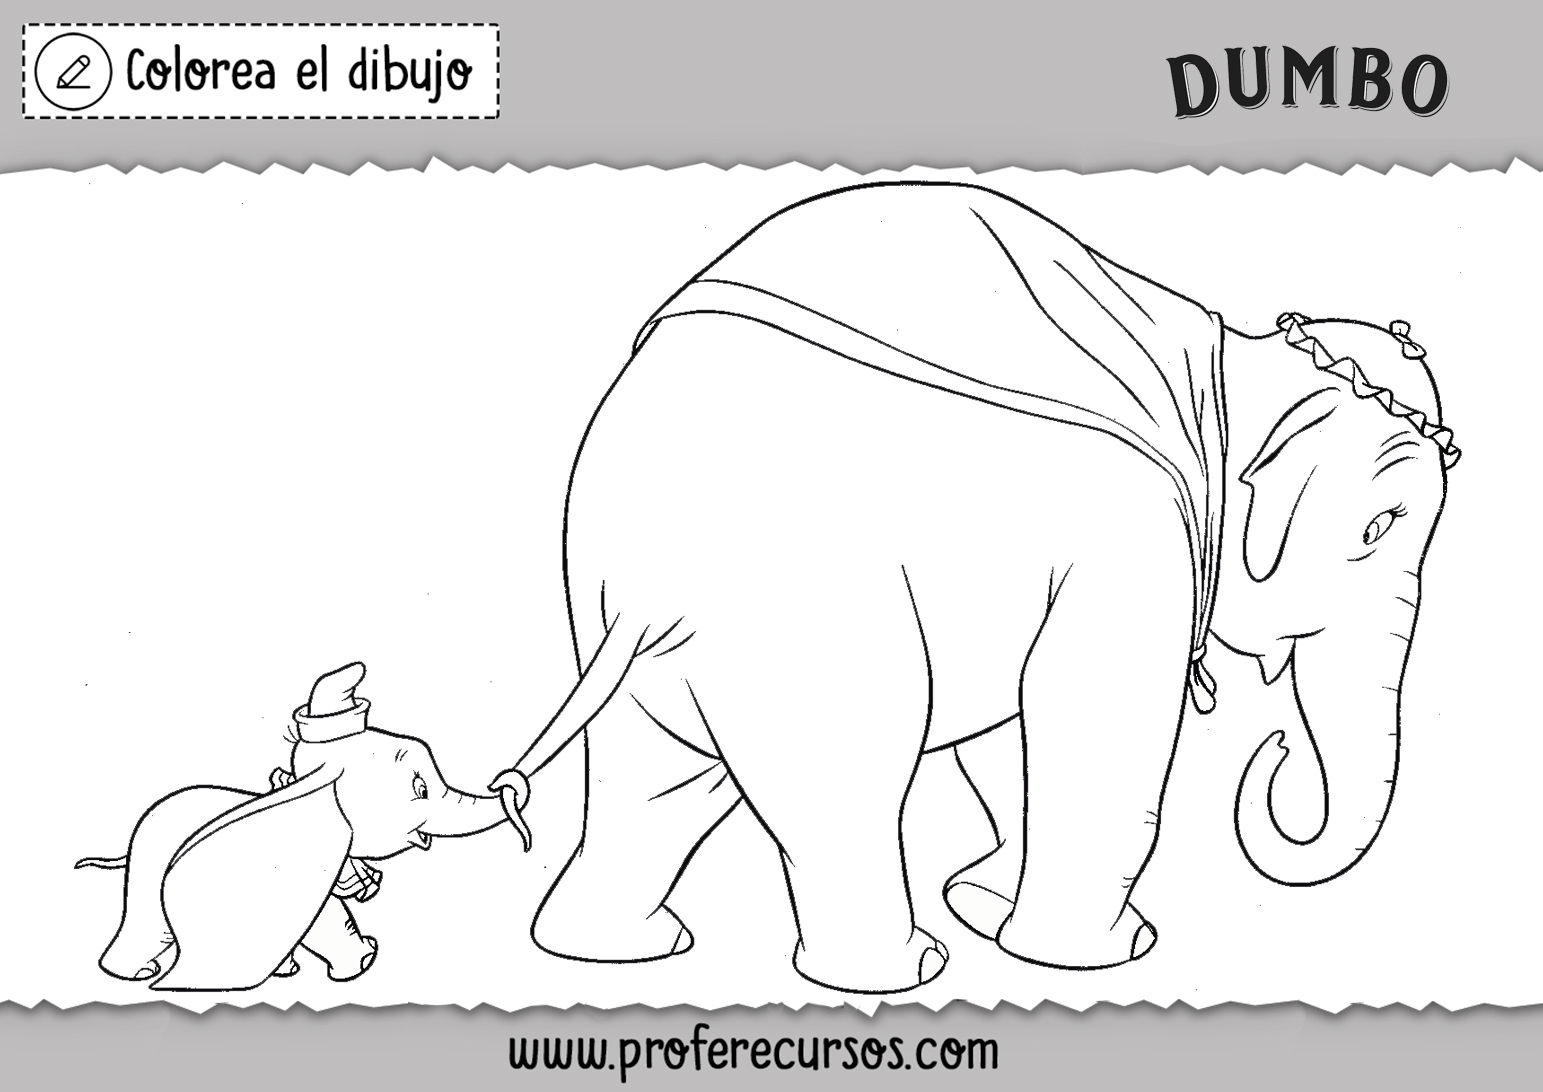 Dumbo colorear dibujos